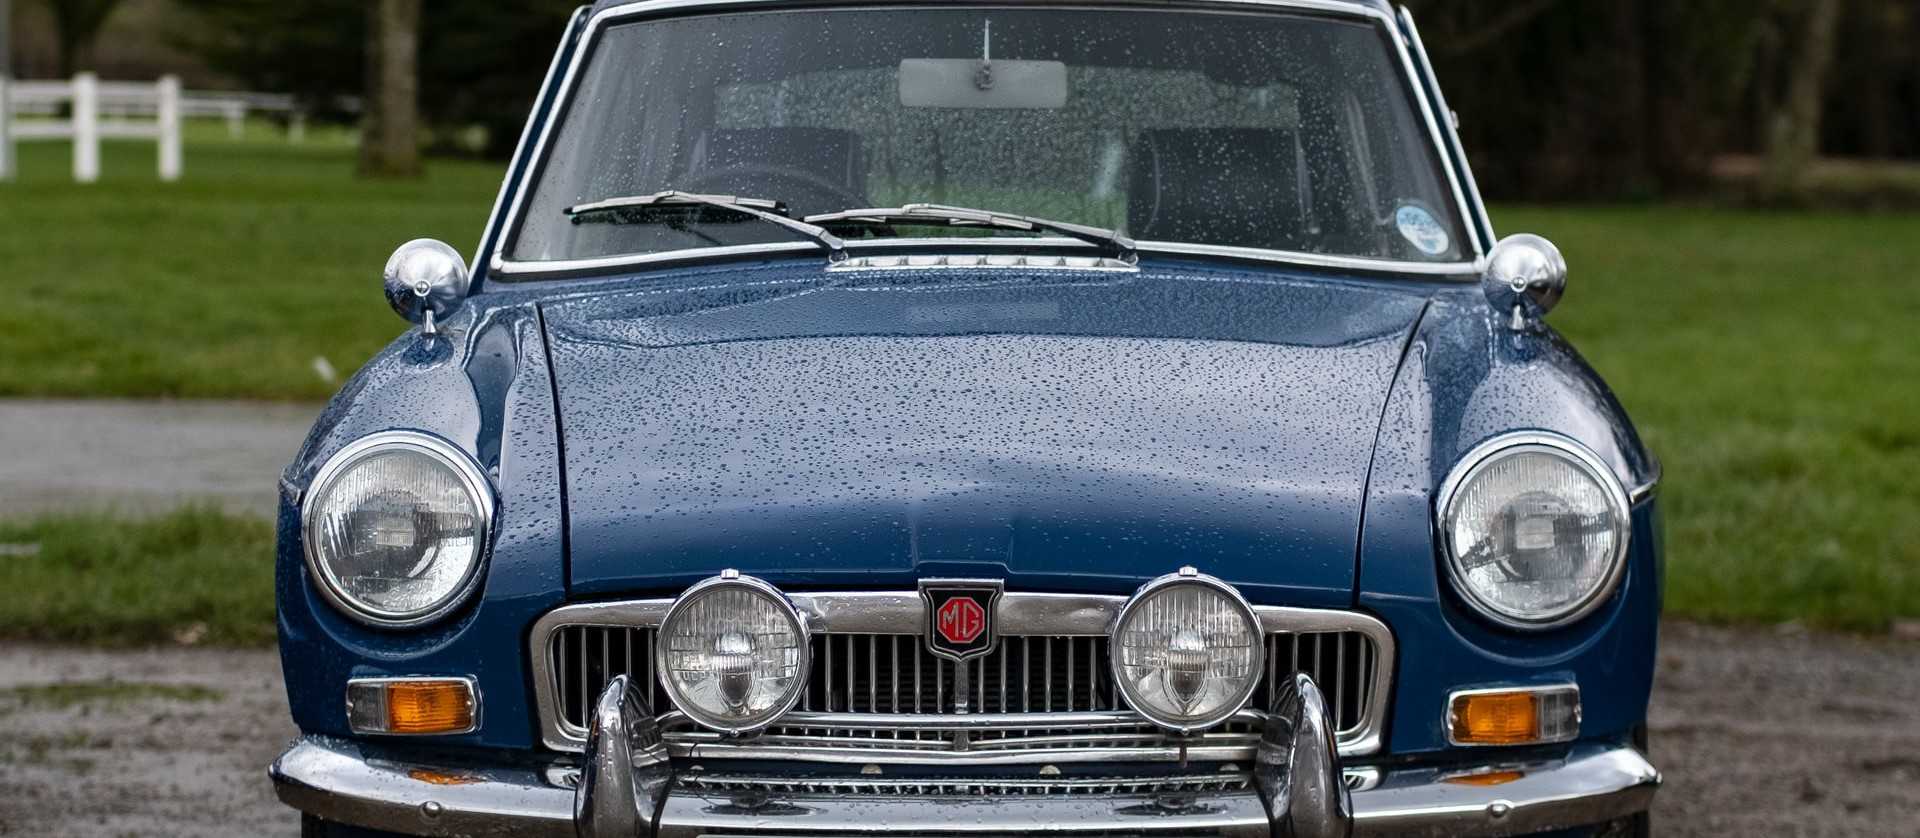 Blue Oldtimer Car in a Rainy Day | Goodwill Car Donations